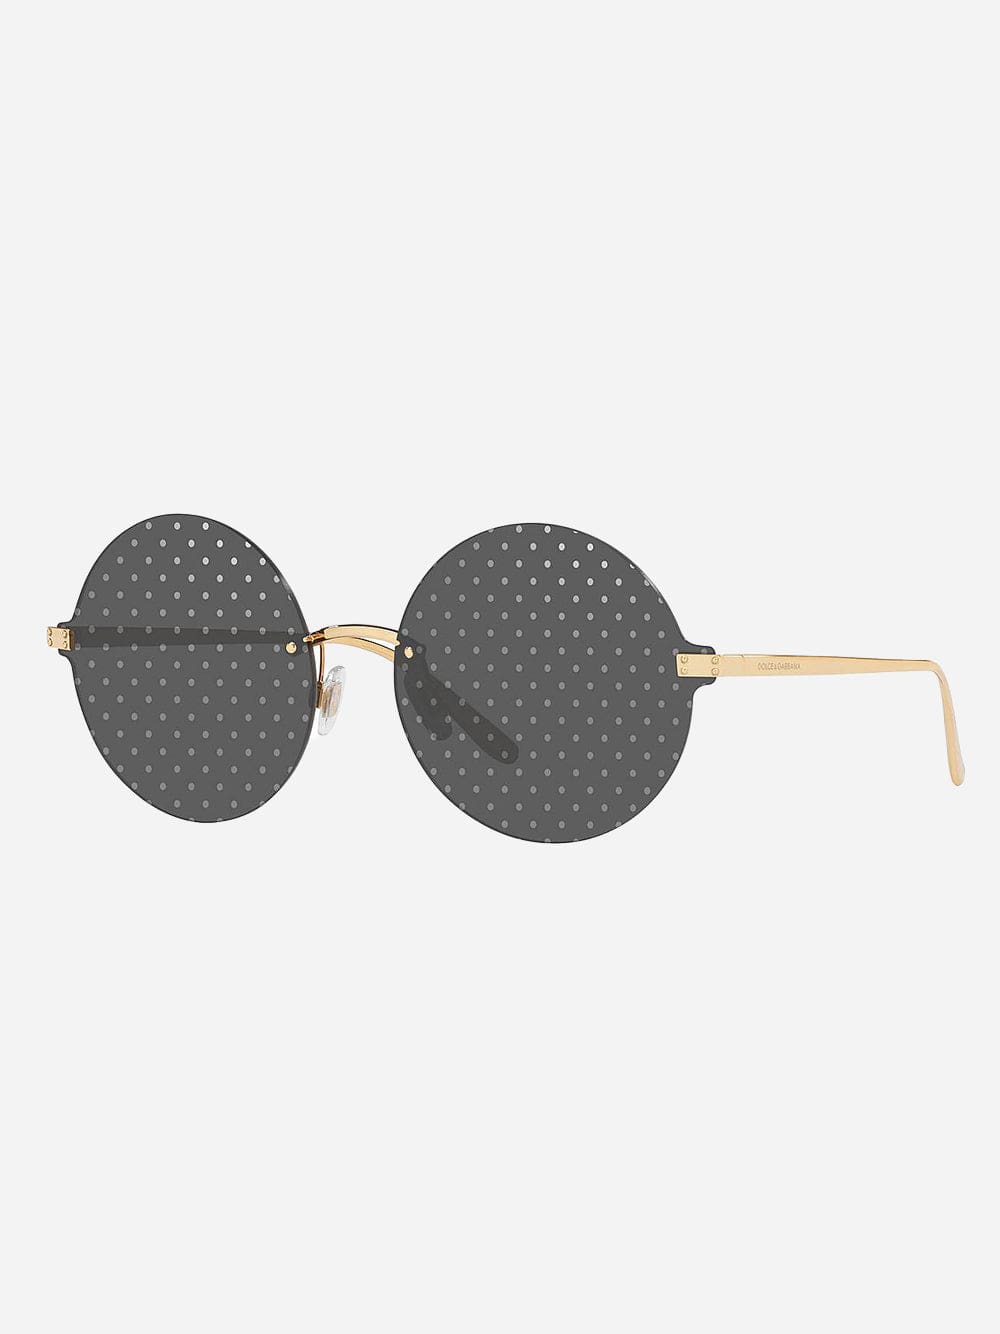 Dolce & Gabbana DG 2228 Sunglasses